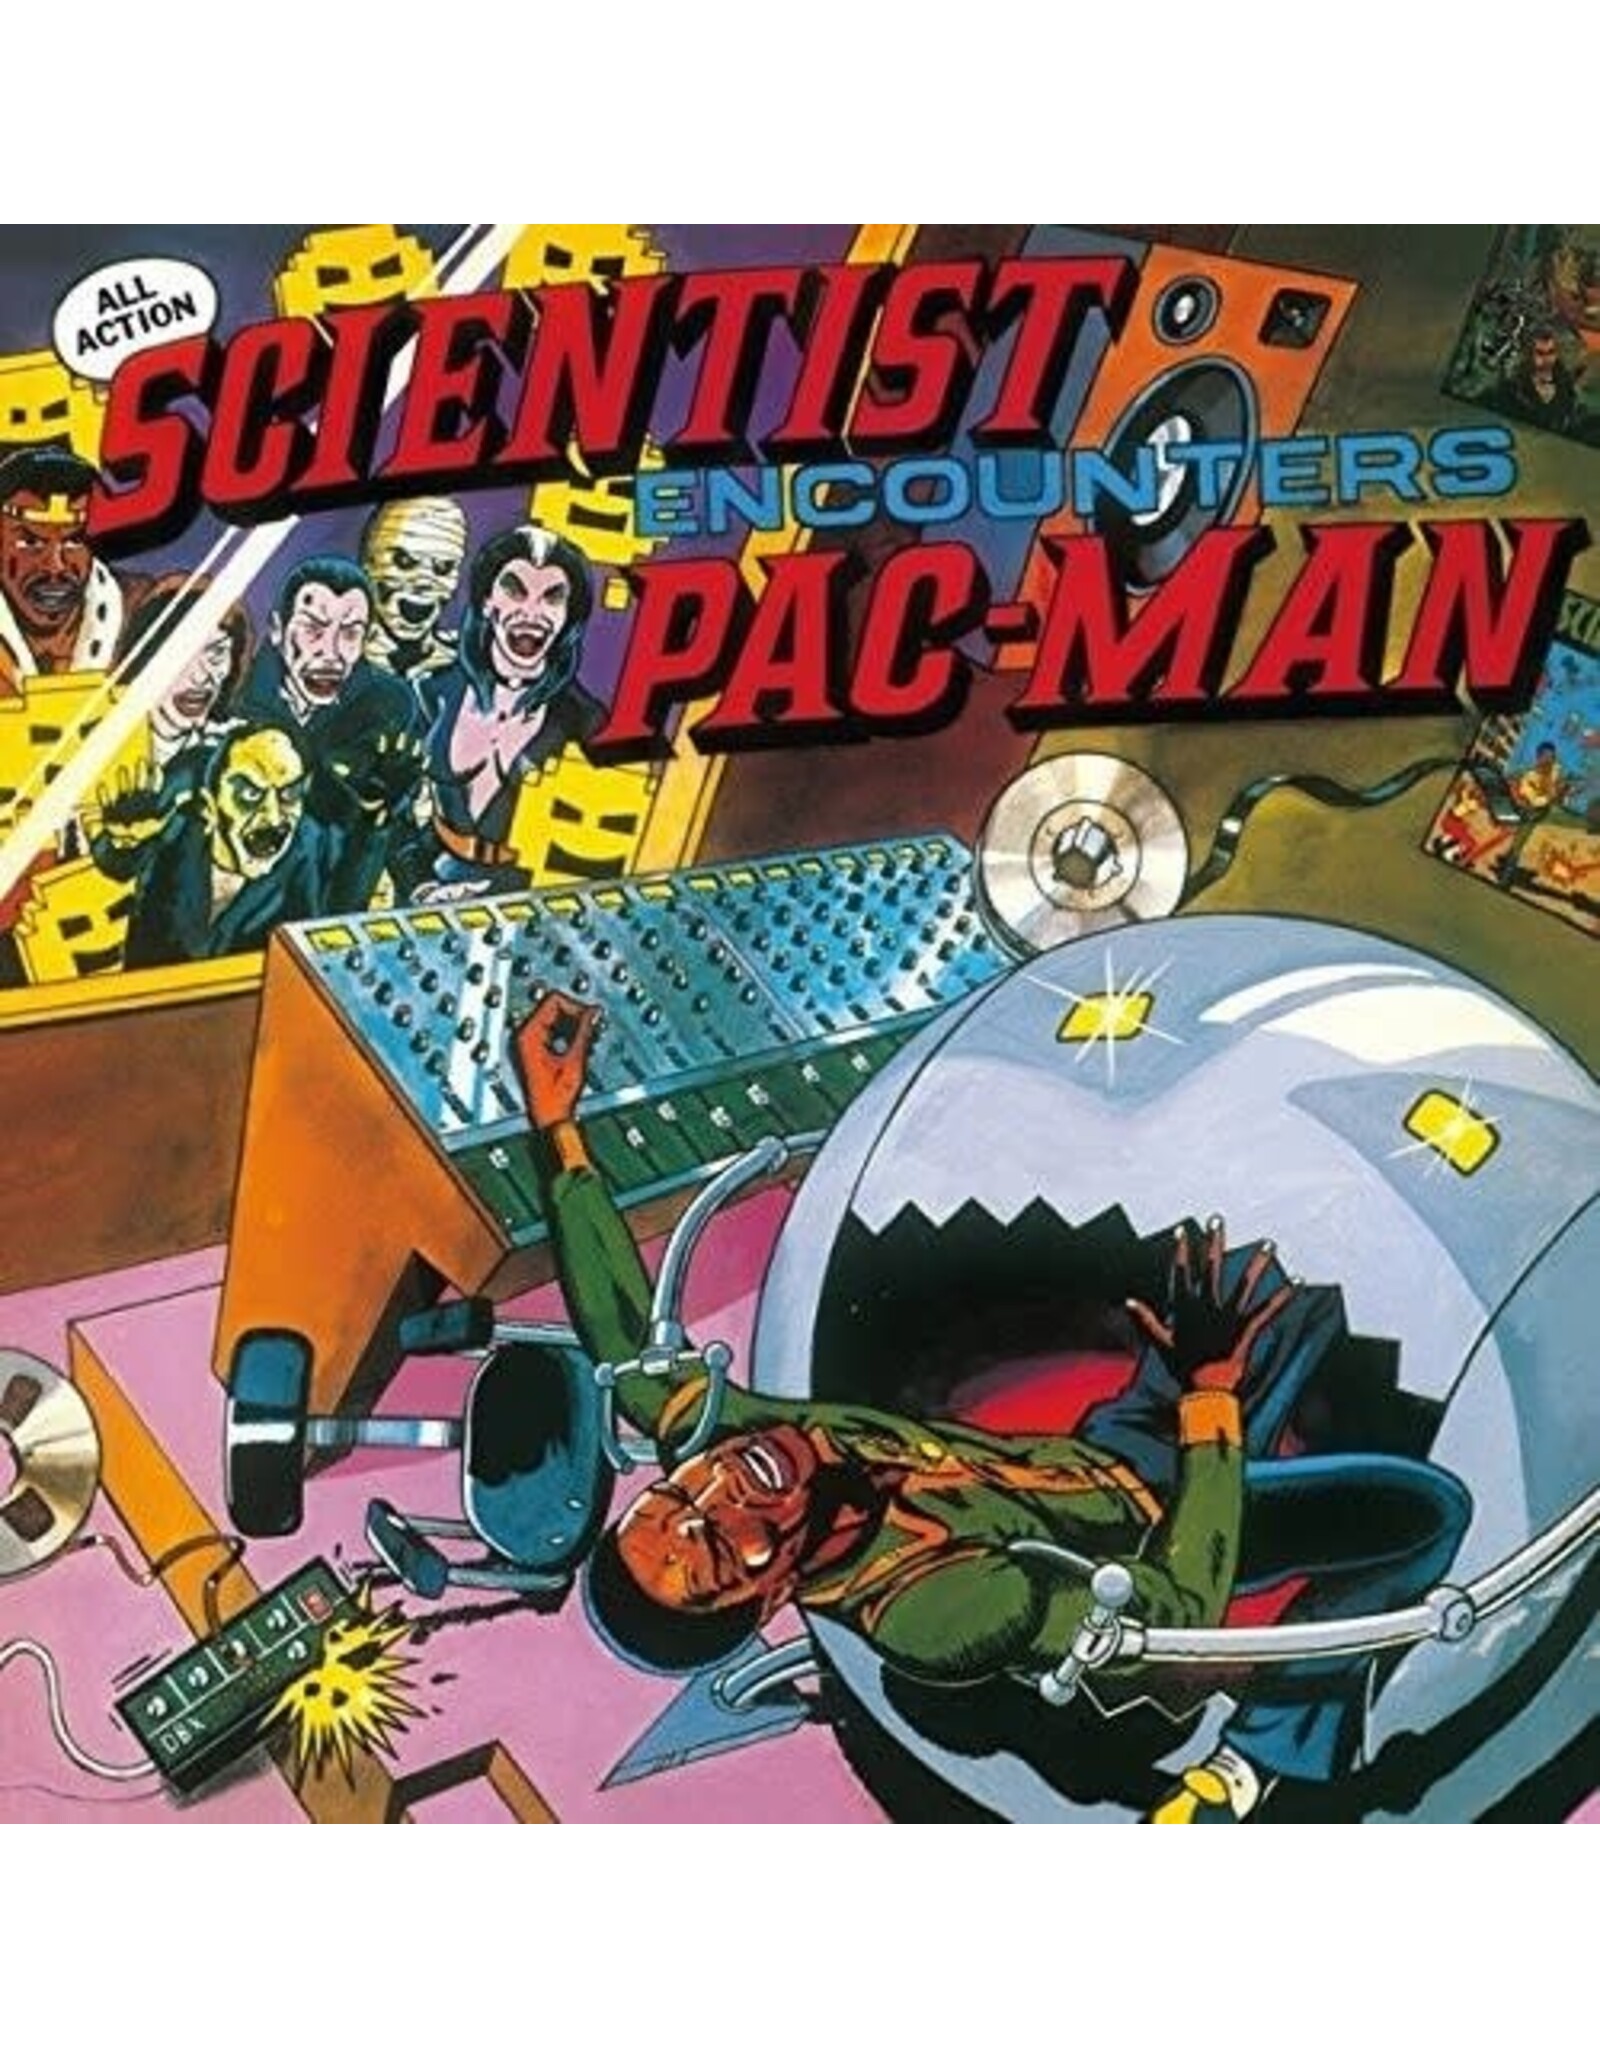 Dub Mir Scientist: Encounters Pac-Man at Channel One LP